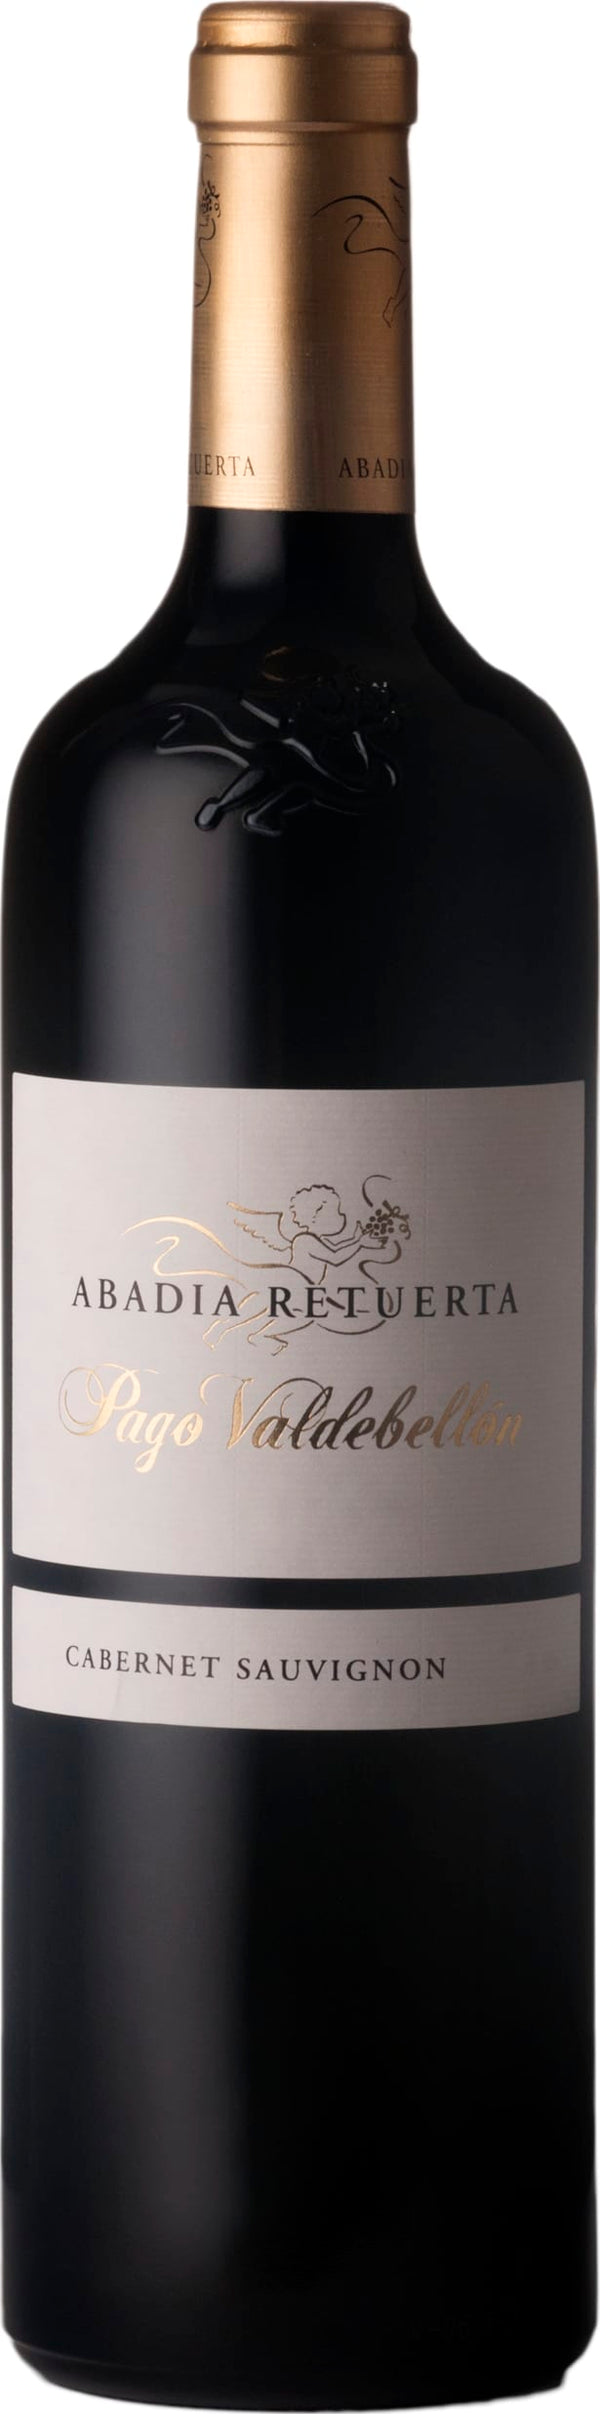 Abadia Retuerta Pago Valdebellon Cabernet Sauvignon 2018 6x75cl - Just Wines 